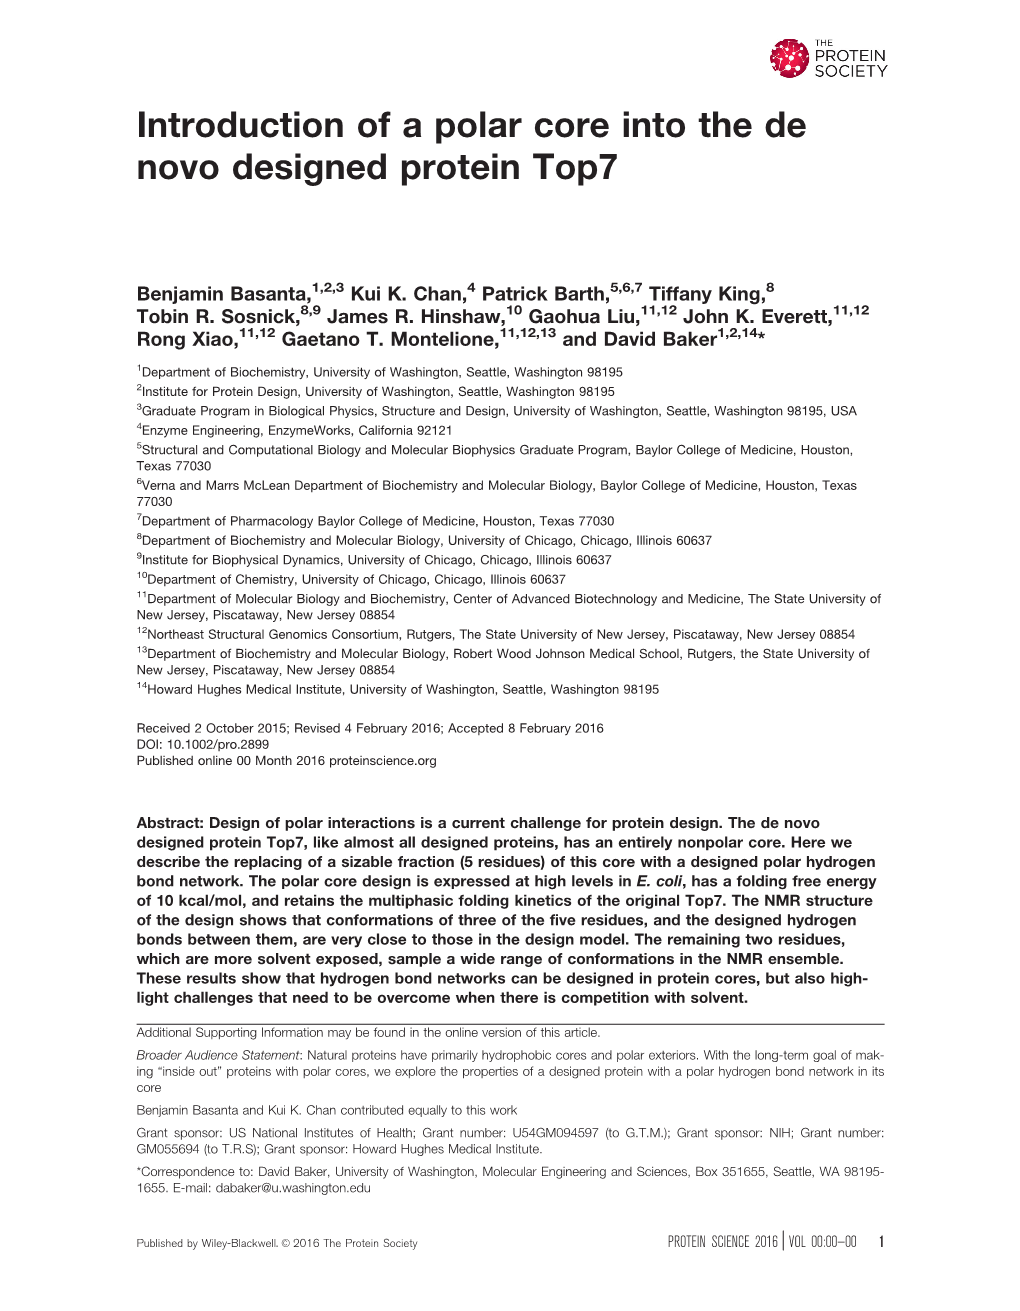 Introduction of a Polar Core Into the De Novo Designed Protein Top7